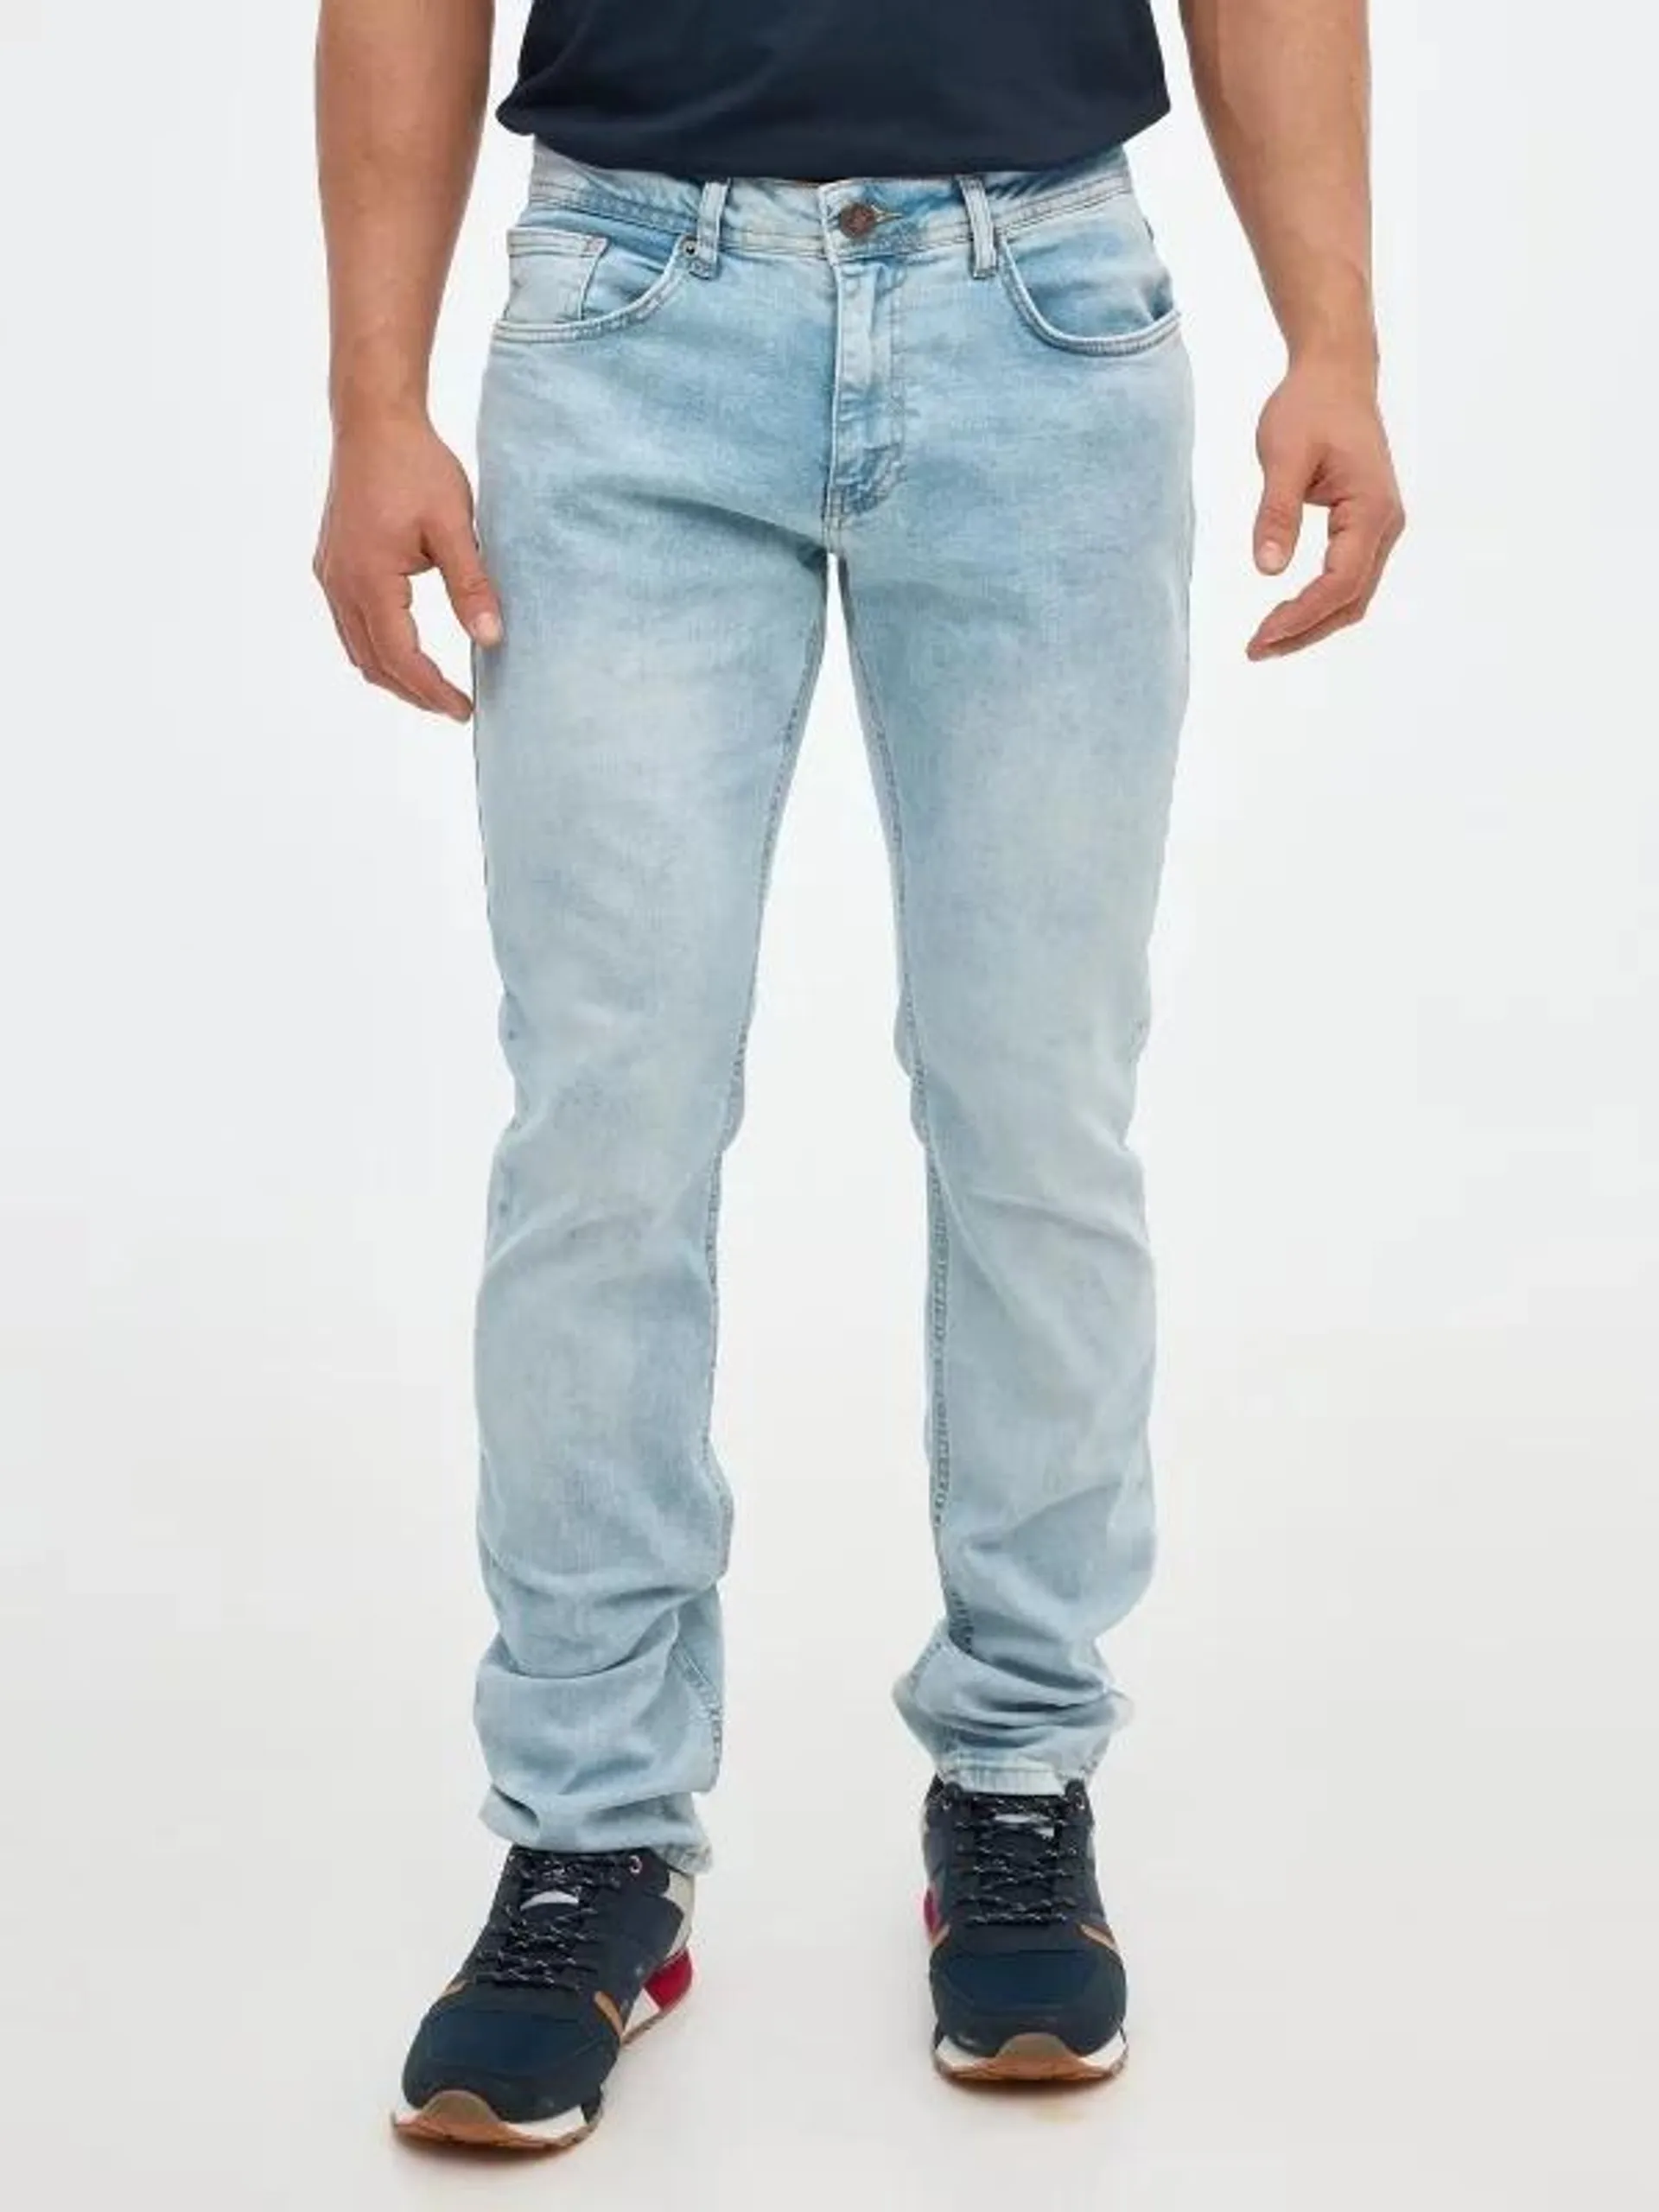 Jeans slim azul desgastados